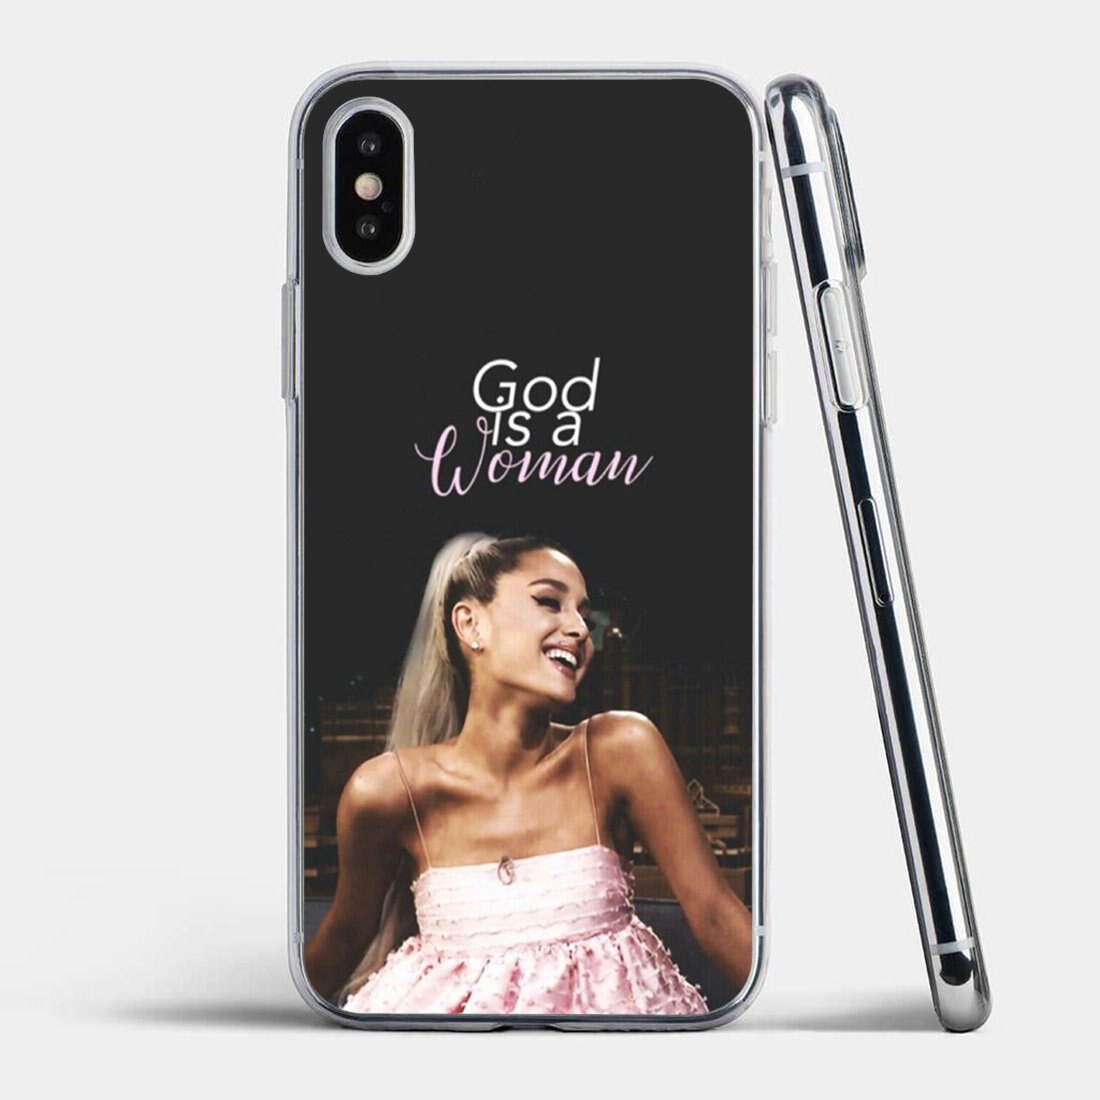 Ariana Grande Rainbow Sweetener Soft Transparent Shell Case For iPhone 6 7 8 Plus 4 4S 3 - Ariana Grande Store